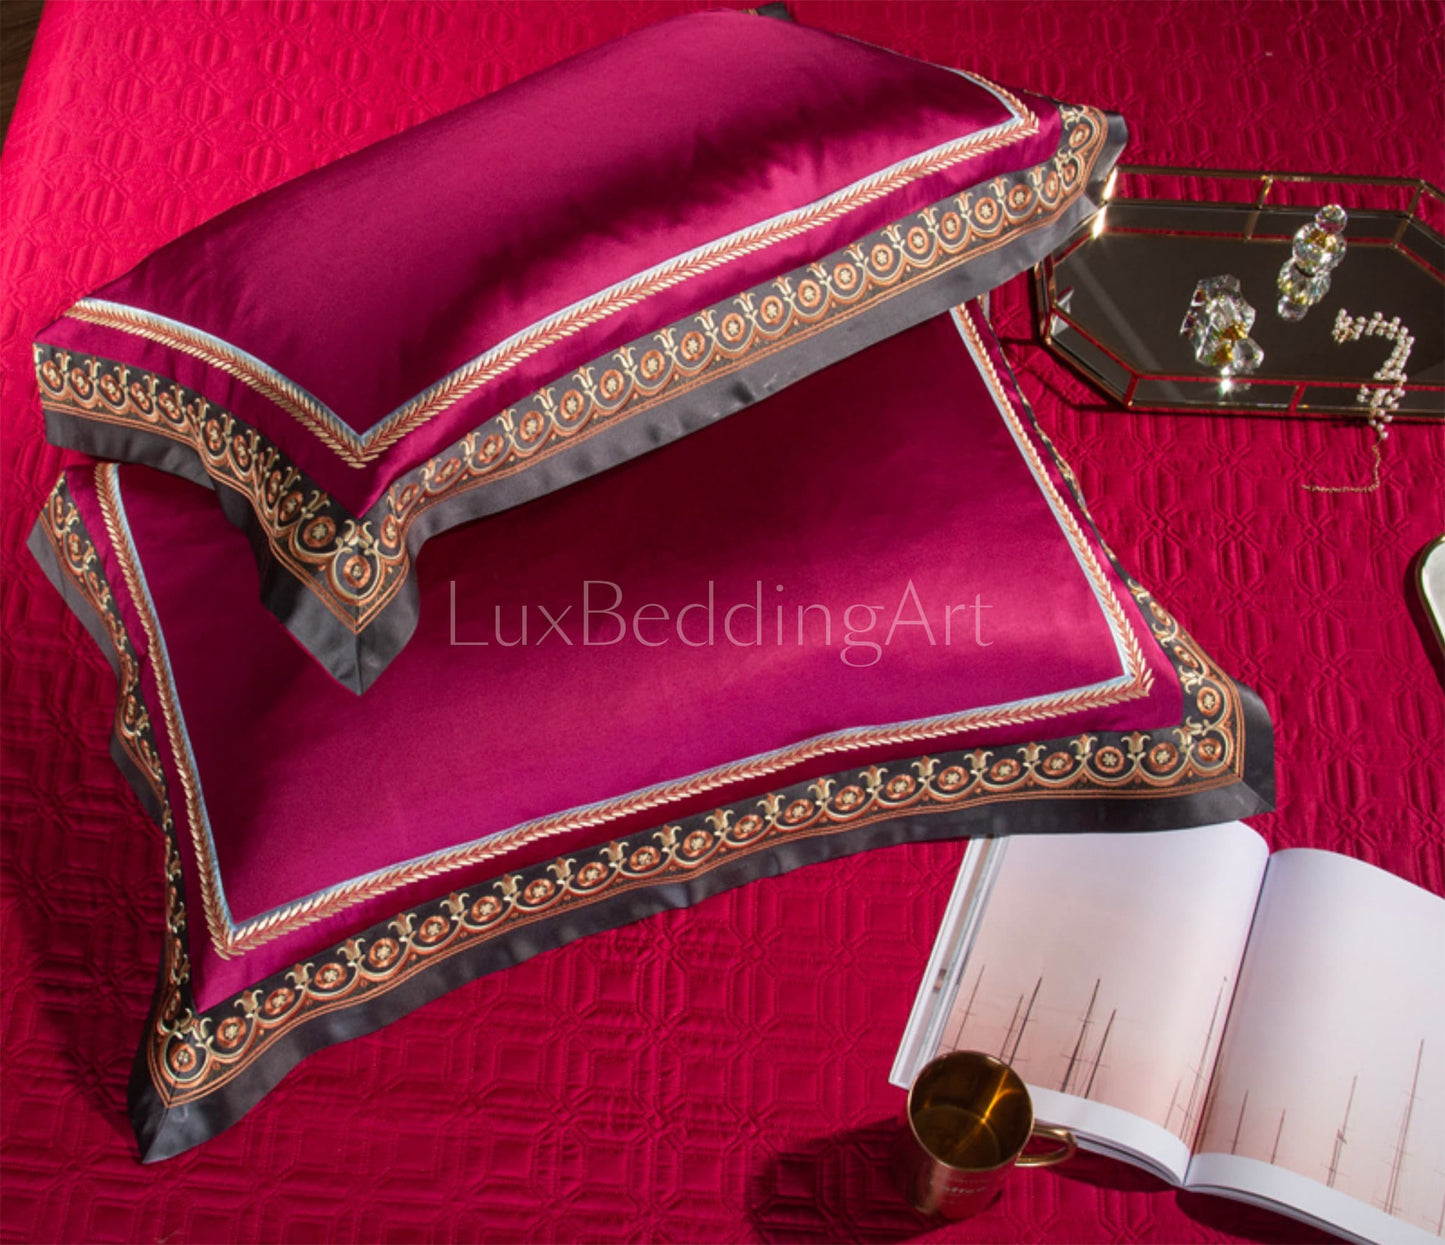 Luxury Premium Large Jacquard with Embroidery Rose Baroque style design Bedding Set  • 4/6/10/12 PCS